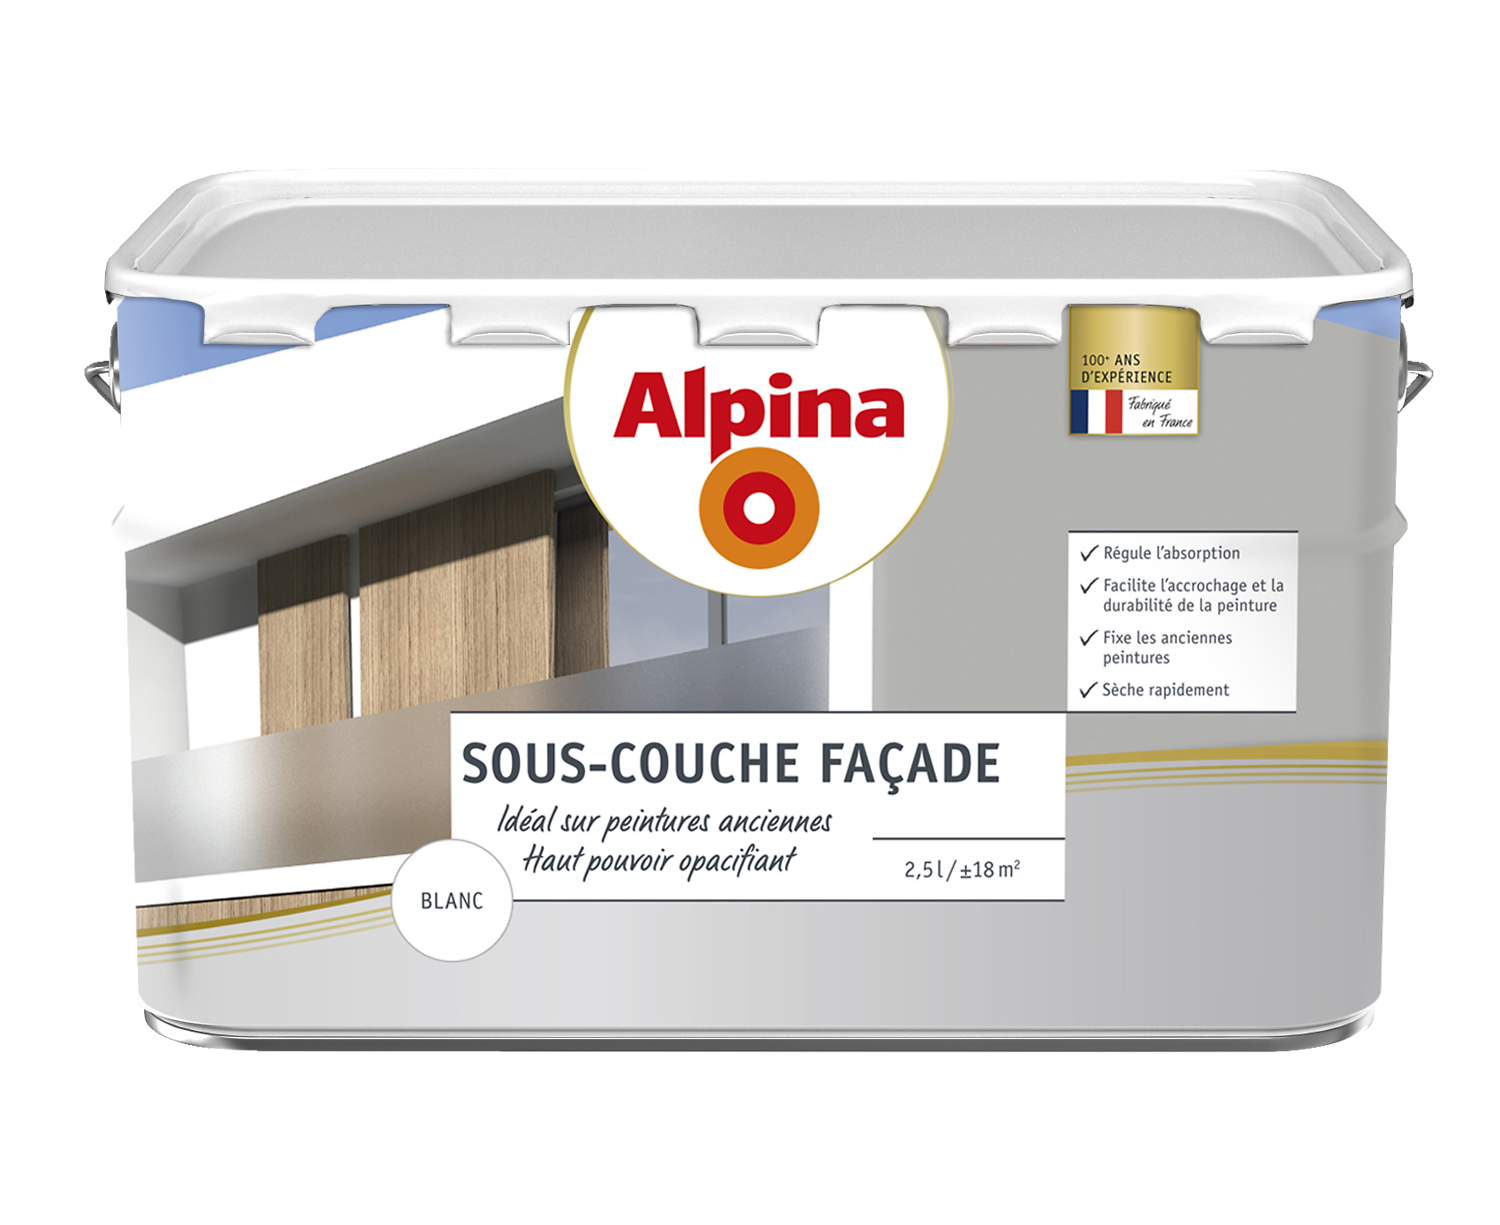 Alpina premium murs & plafonds 0% conservateur mat - Alpina Farben